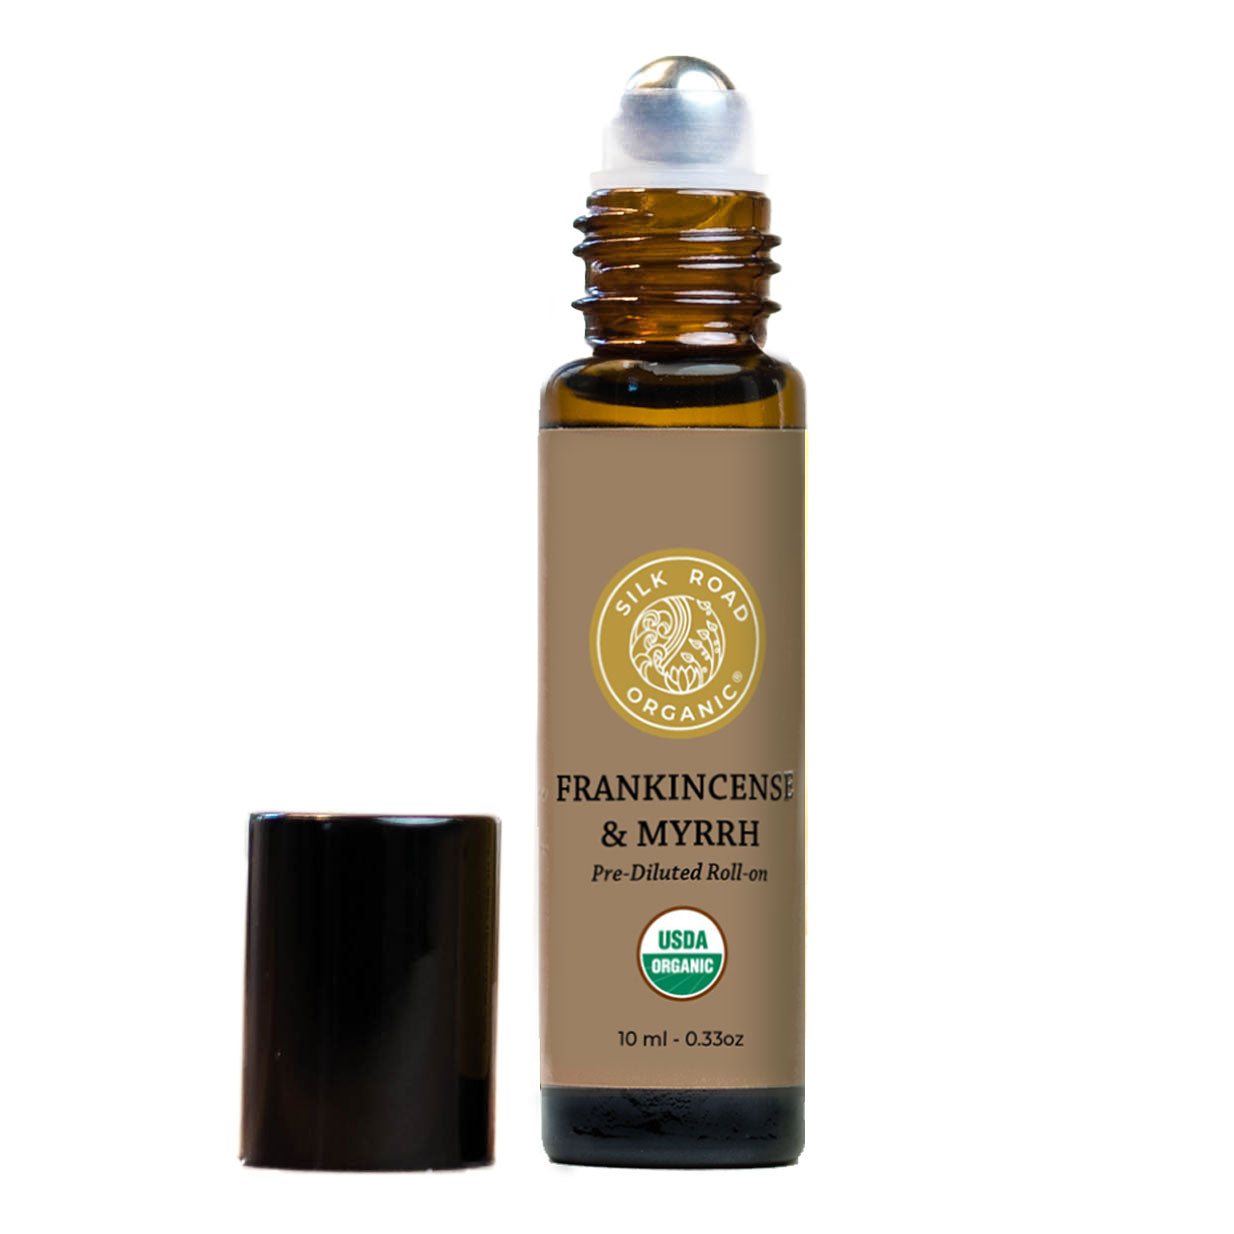 frankincense and myrrh essential oil blend combination spiritual aroma boswellia carterii silk road organic